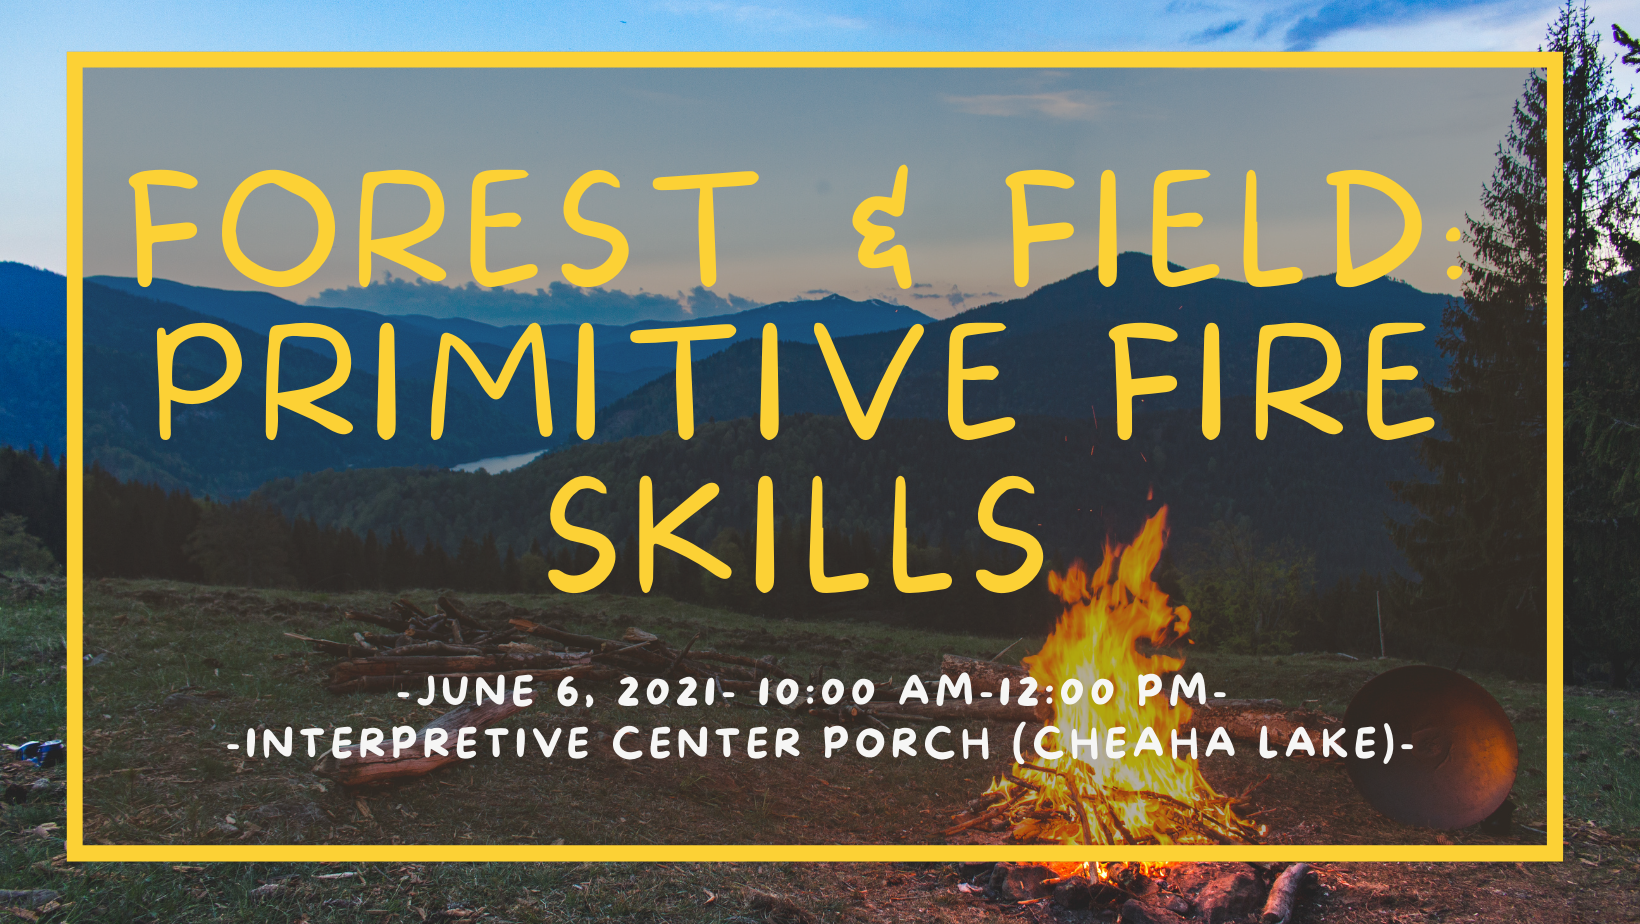 CSP Forest & Field: Primitive Fire Skills